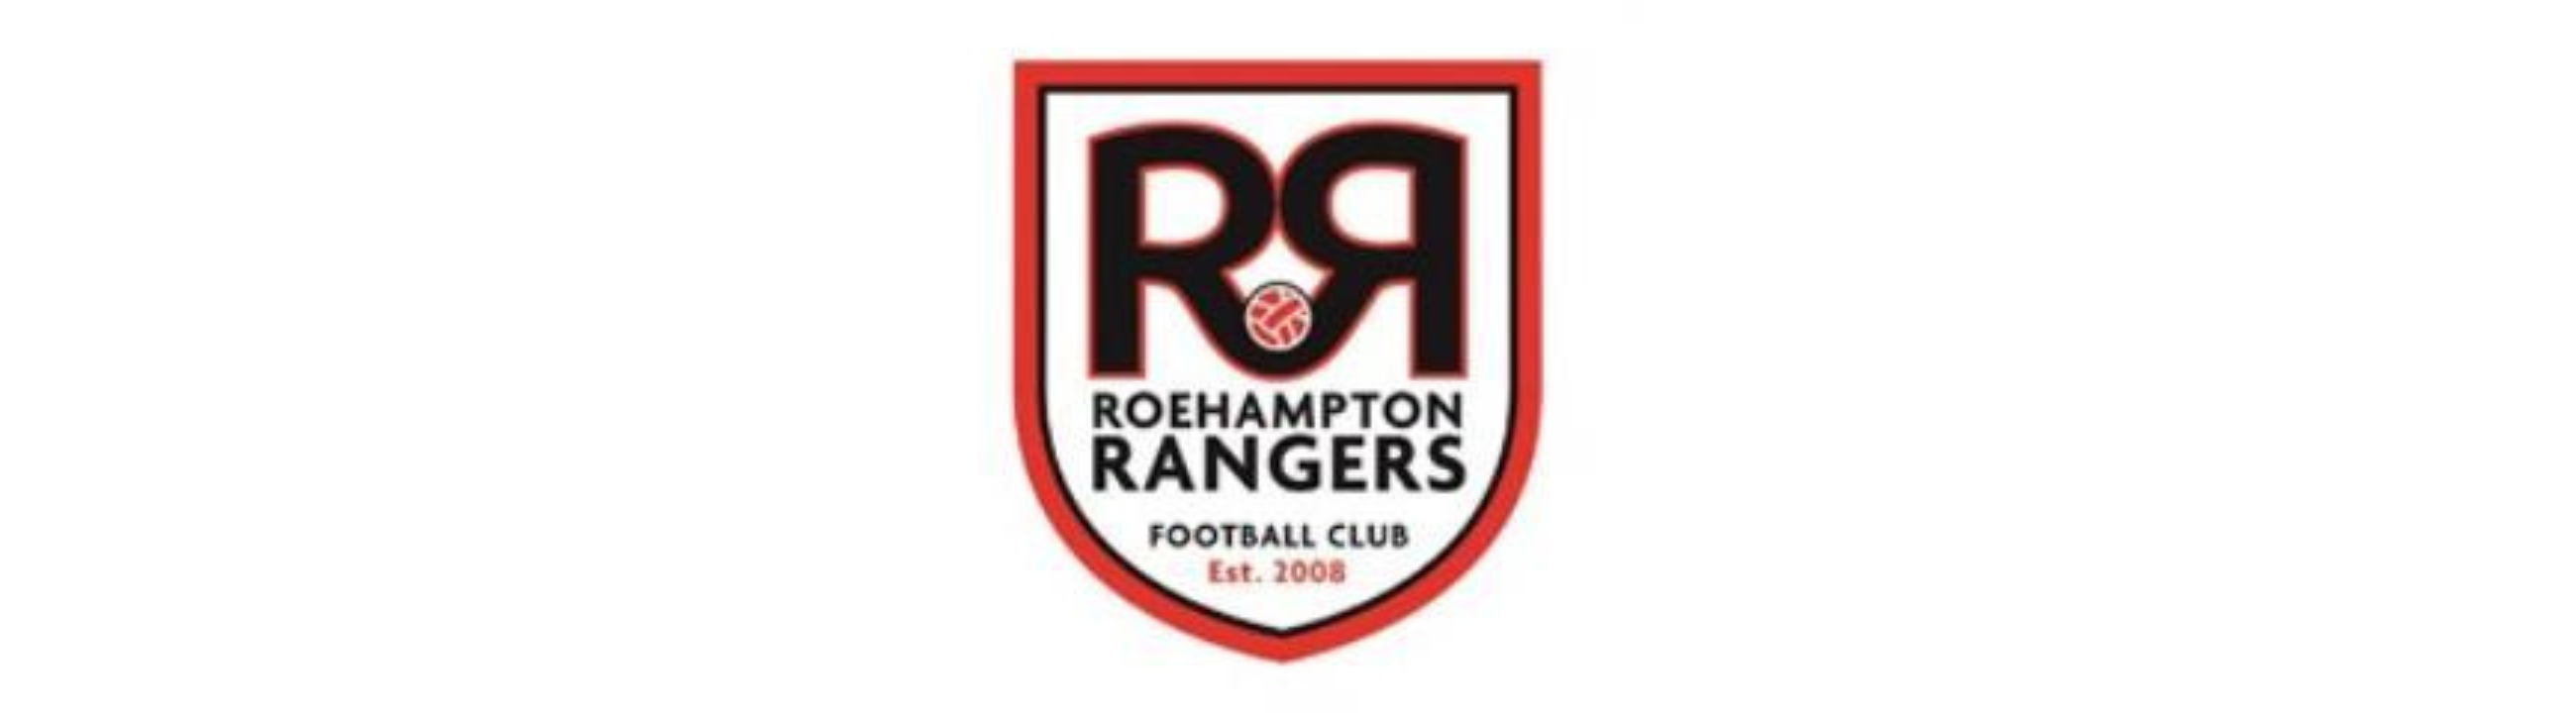 Roehampton Rangers Football Club